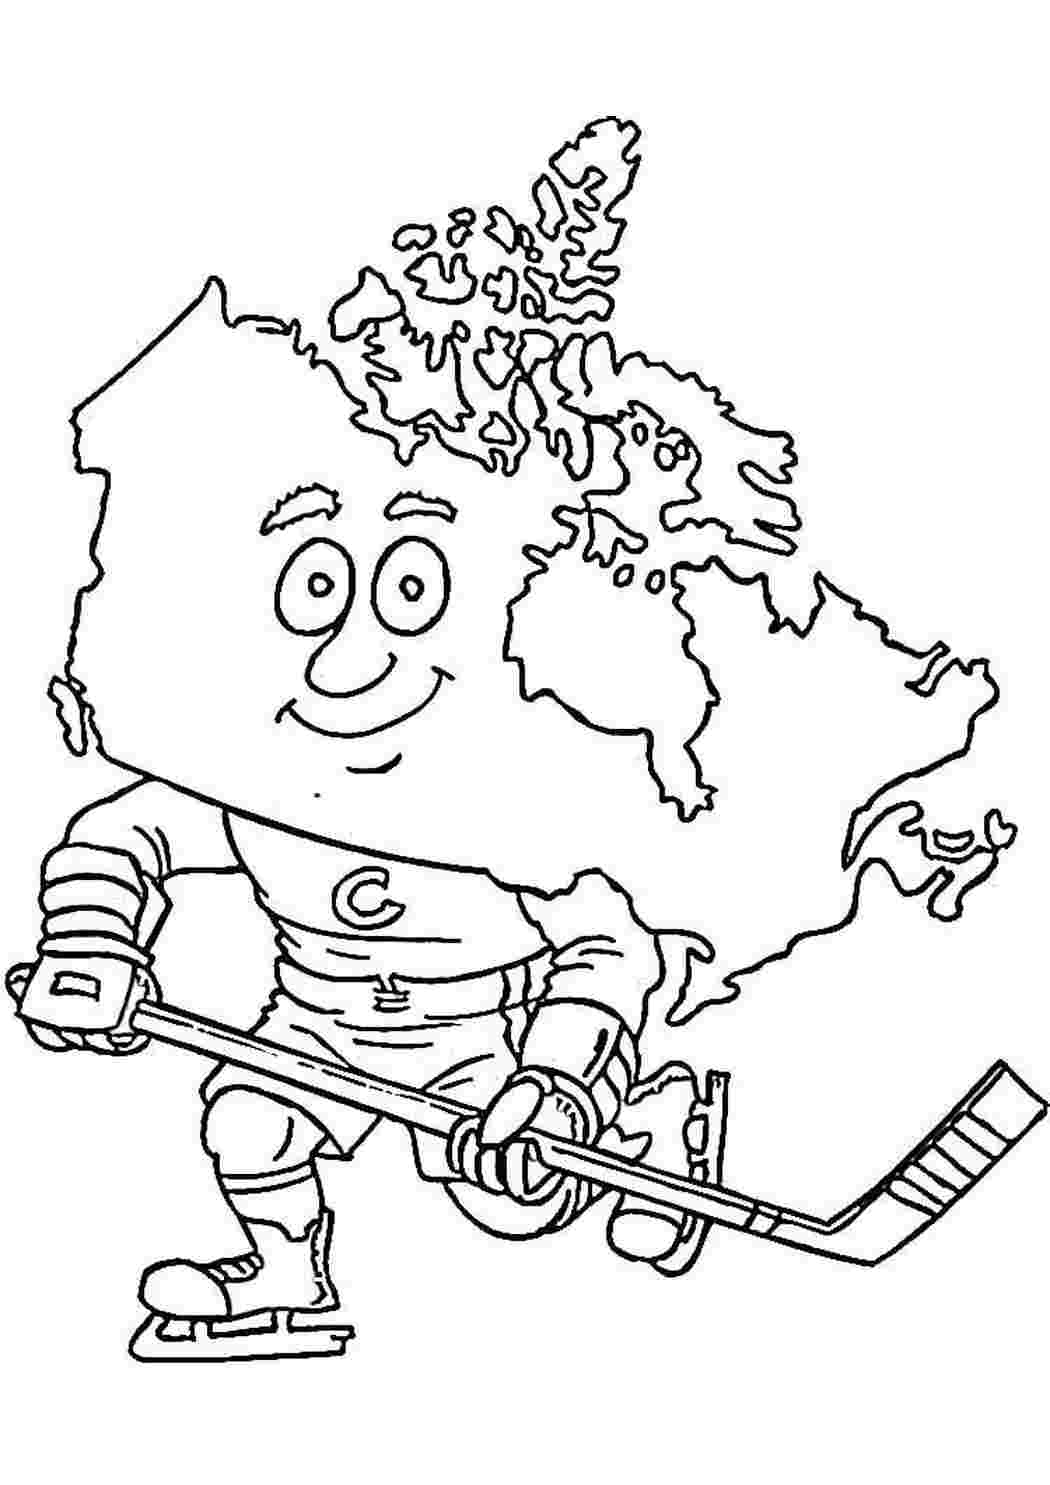 Канада раскраска для детей